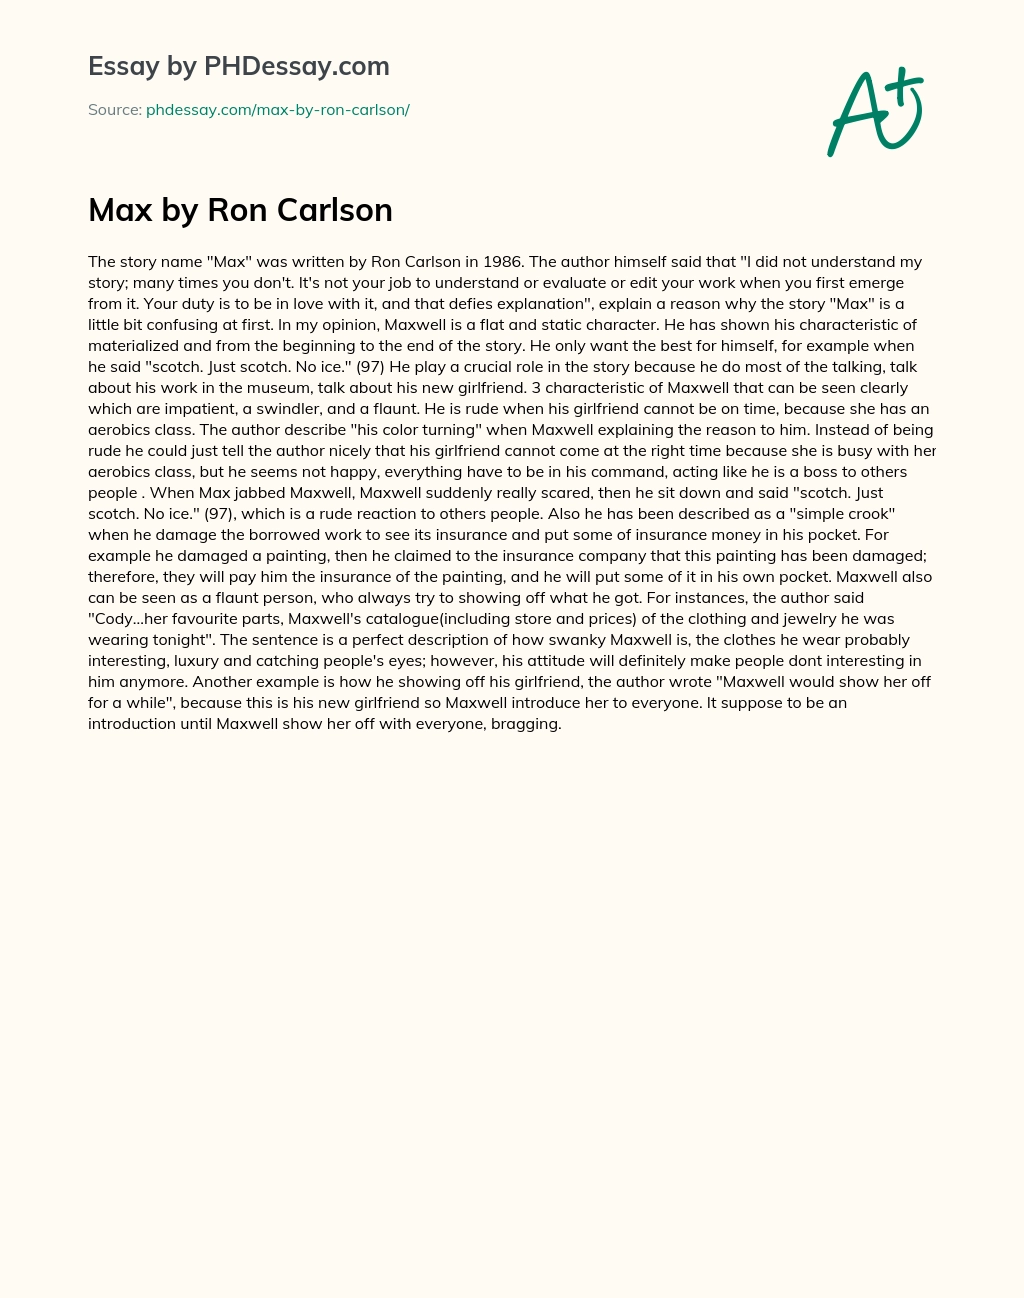 Max by Ron Carlson essay